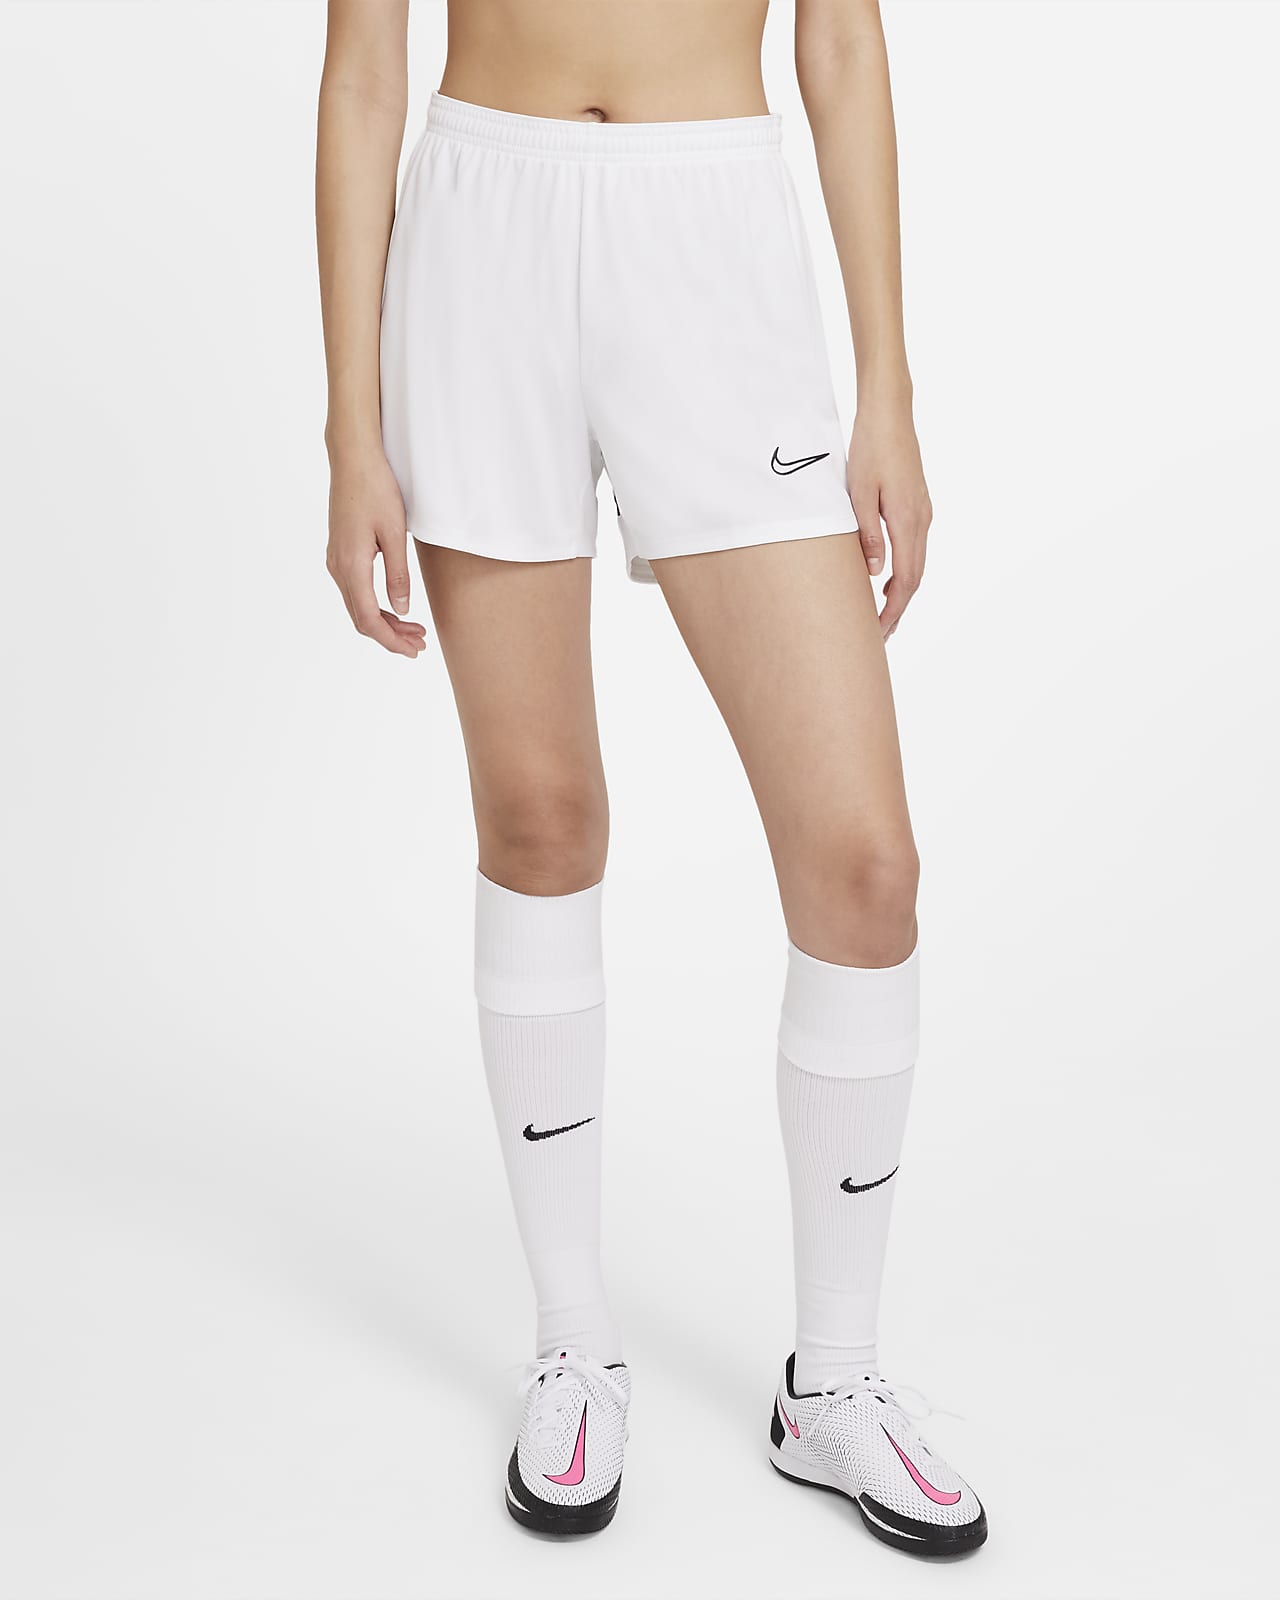 nike soccer shorts womens